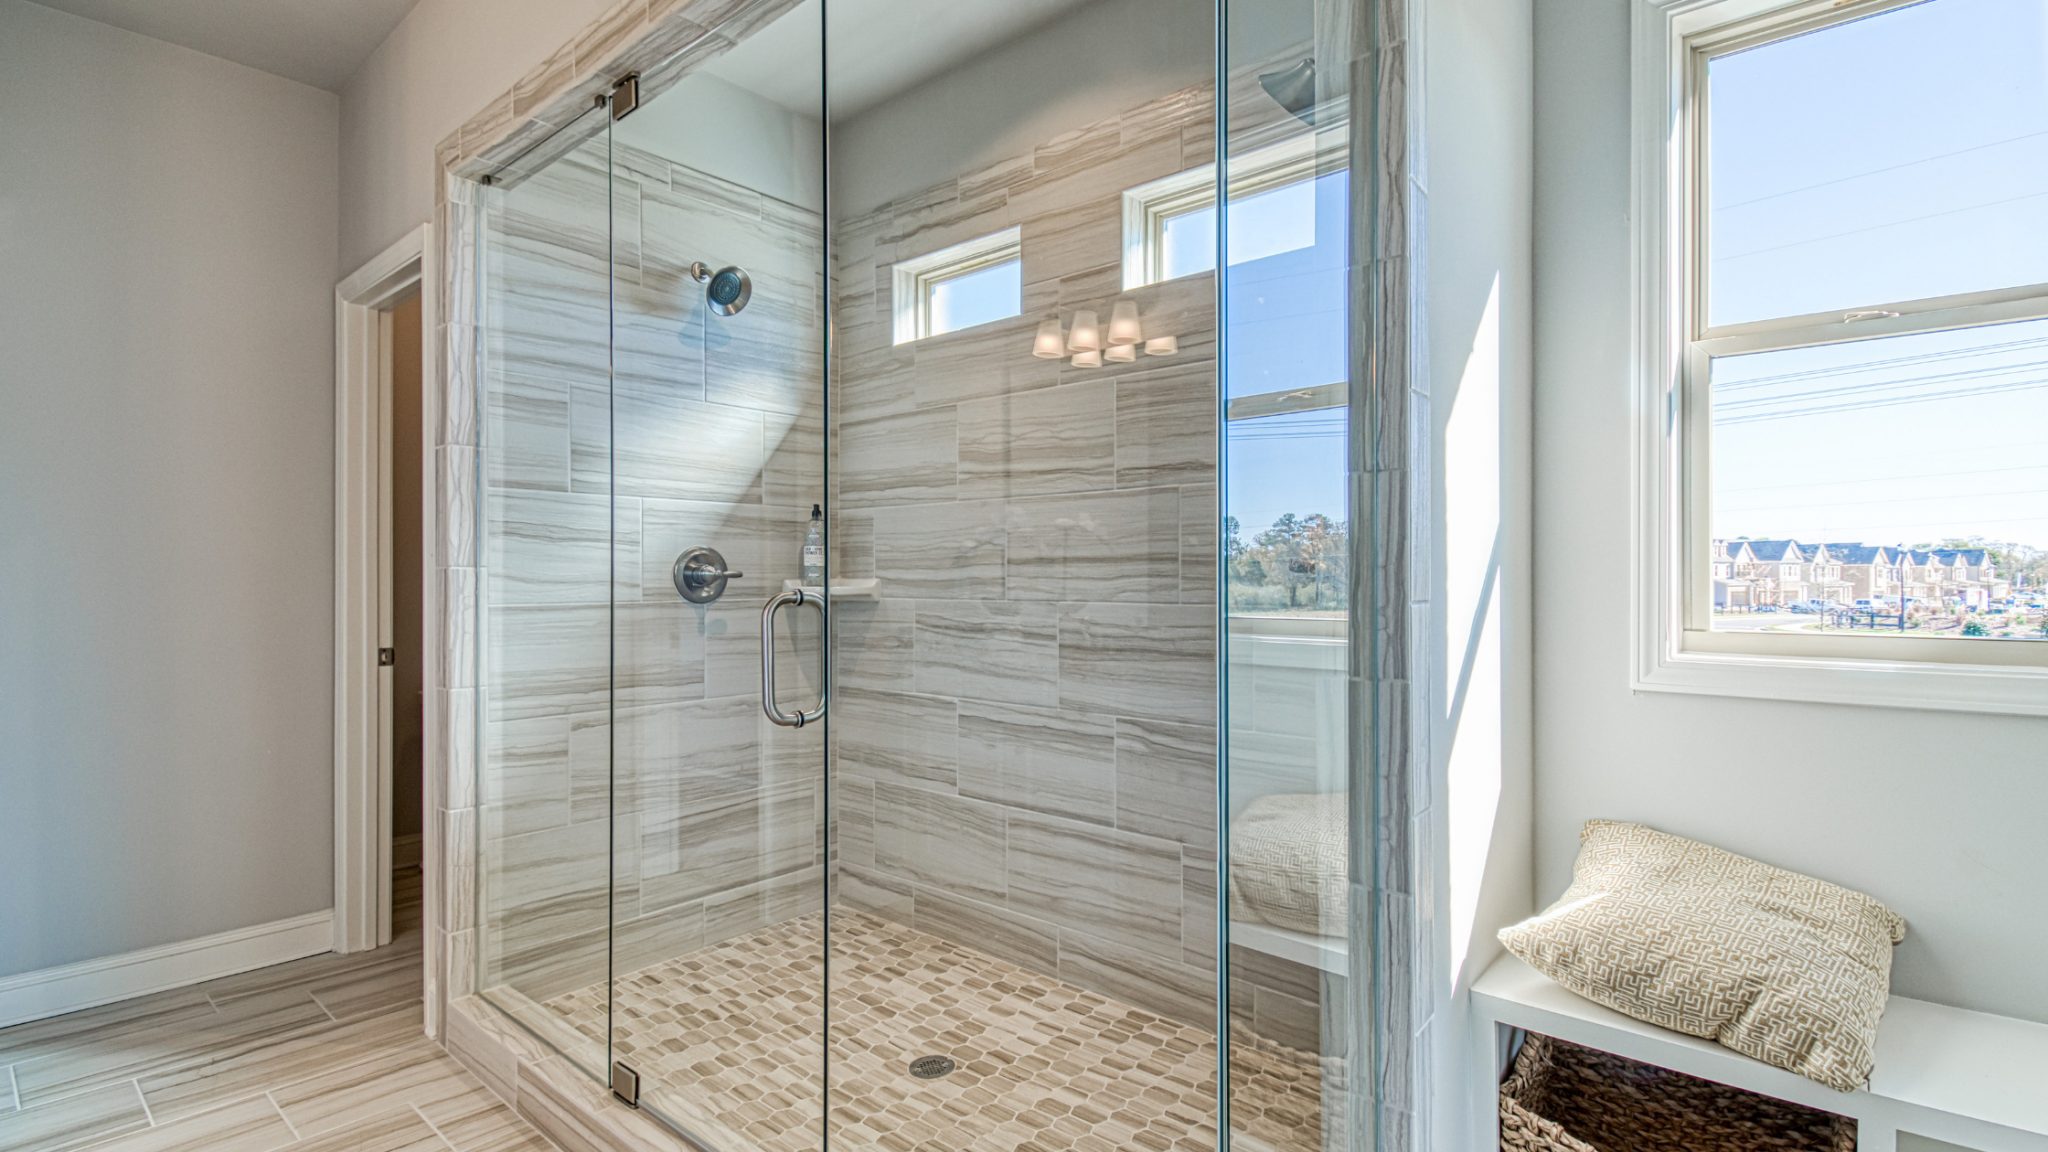 9 Useful Tips to Clean Glass Shower Door - Home Bunch Interior Design Ideas